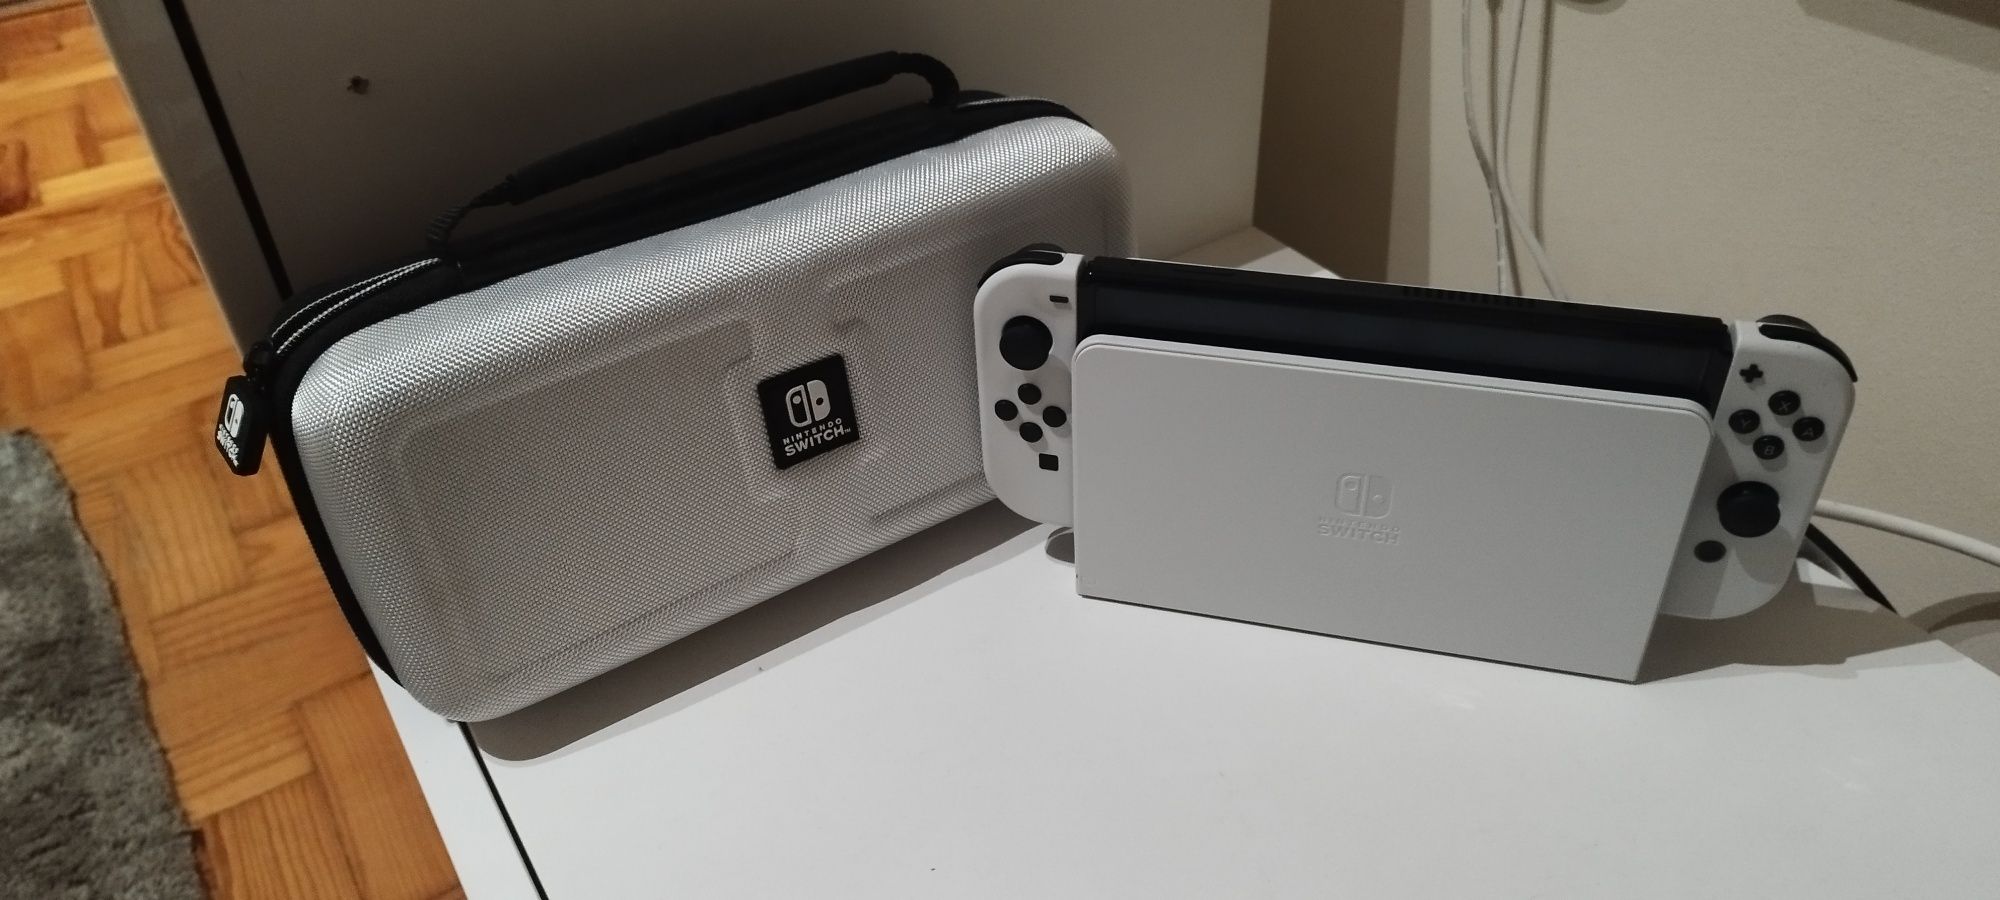 Consola Nintendo Switch Versão OLED Branca